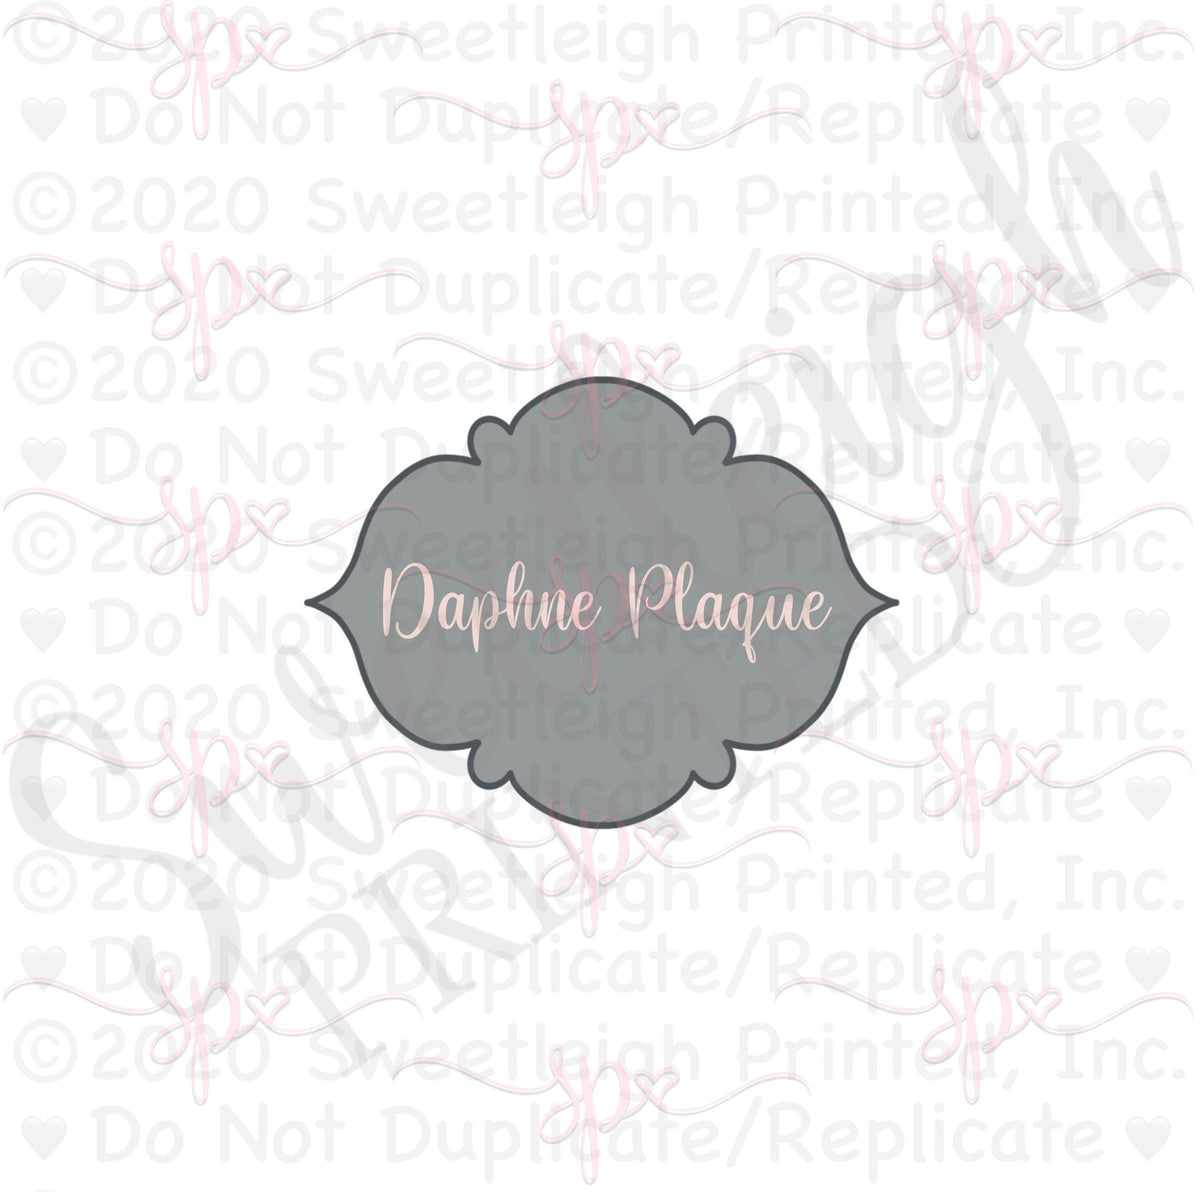 Daphne Plaque Cookie Cutter - Sweetleigh 